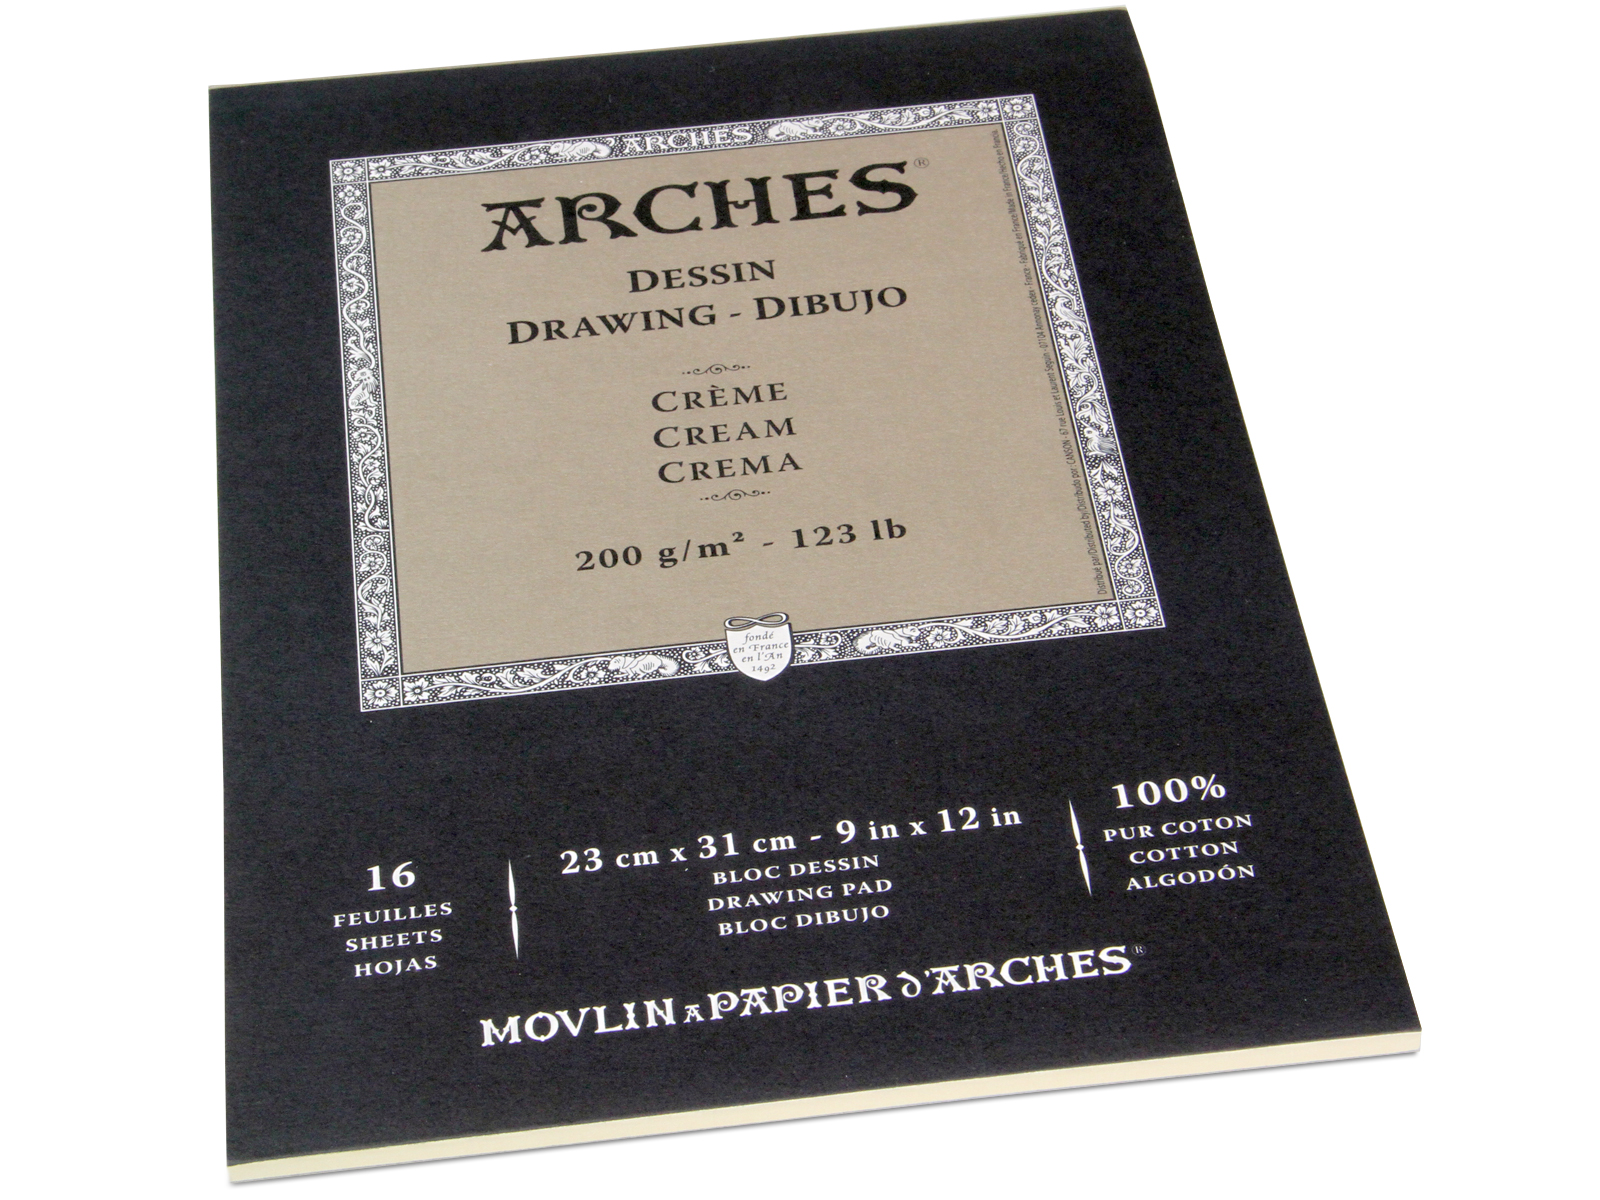 Arches Dessin Cream Drawing Pad 200g